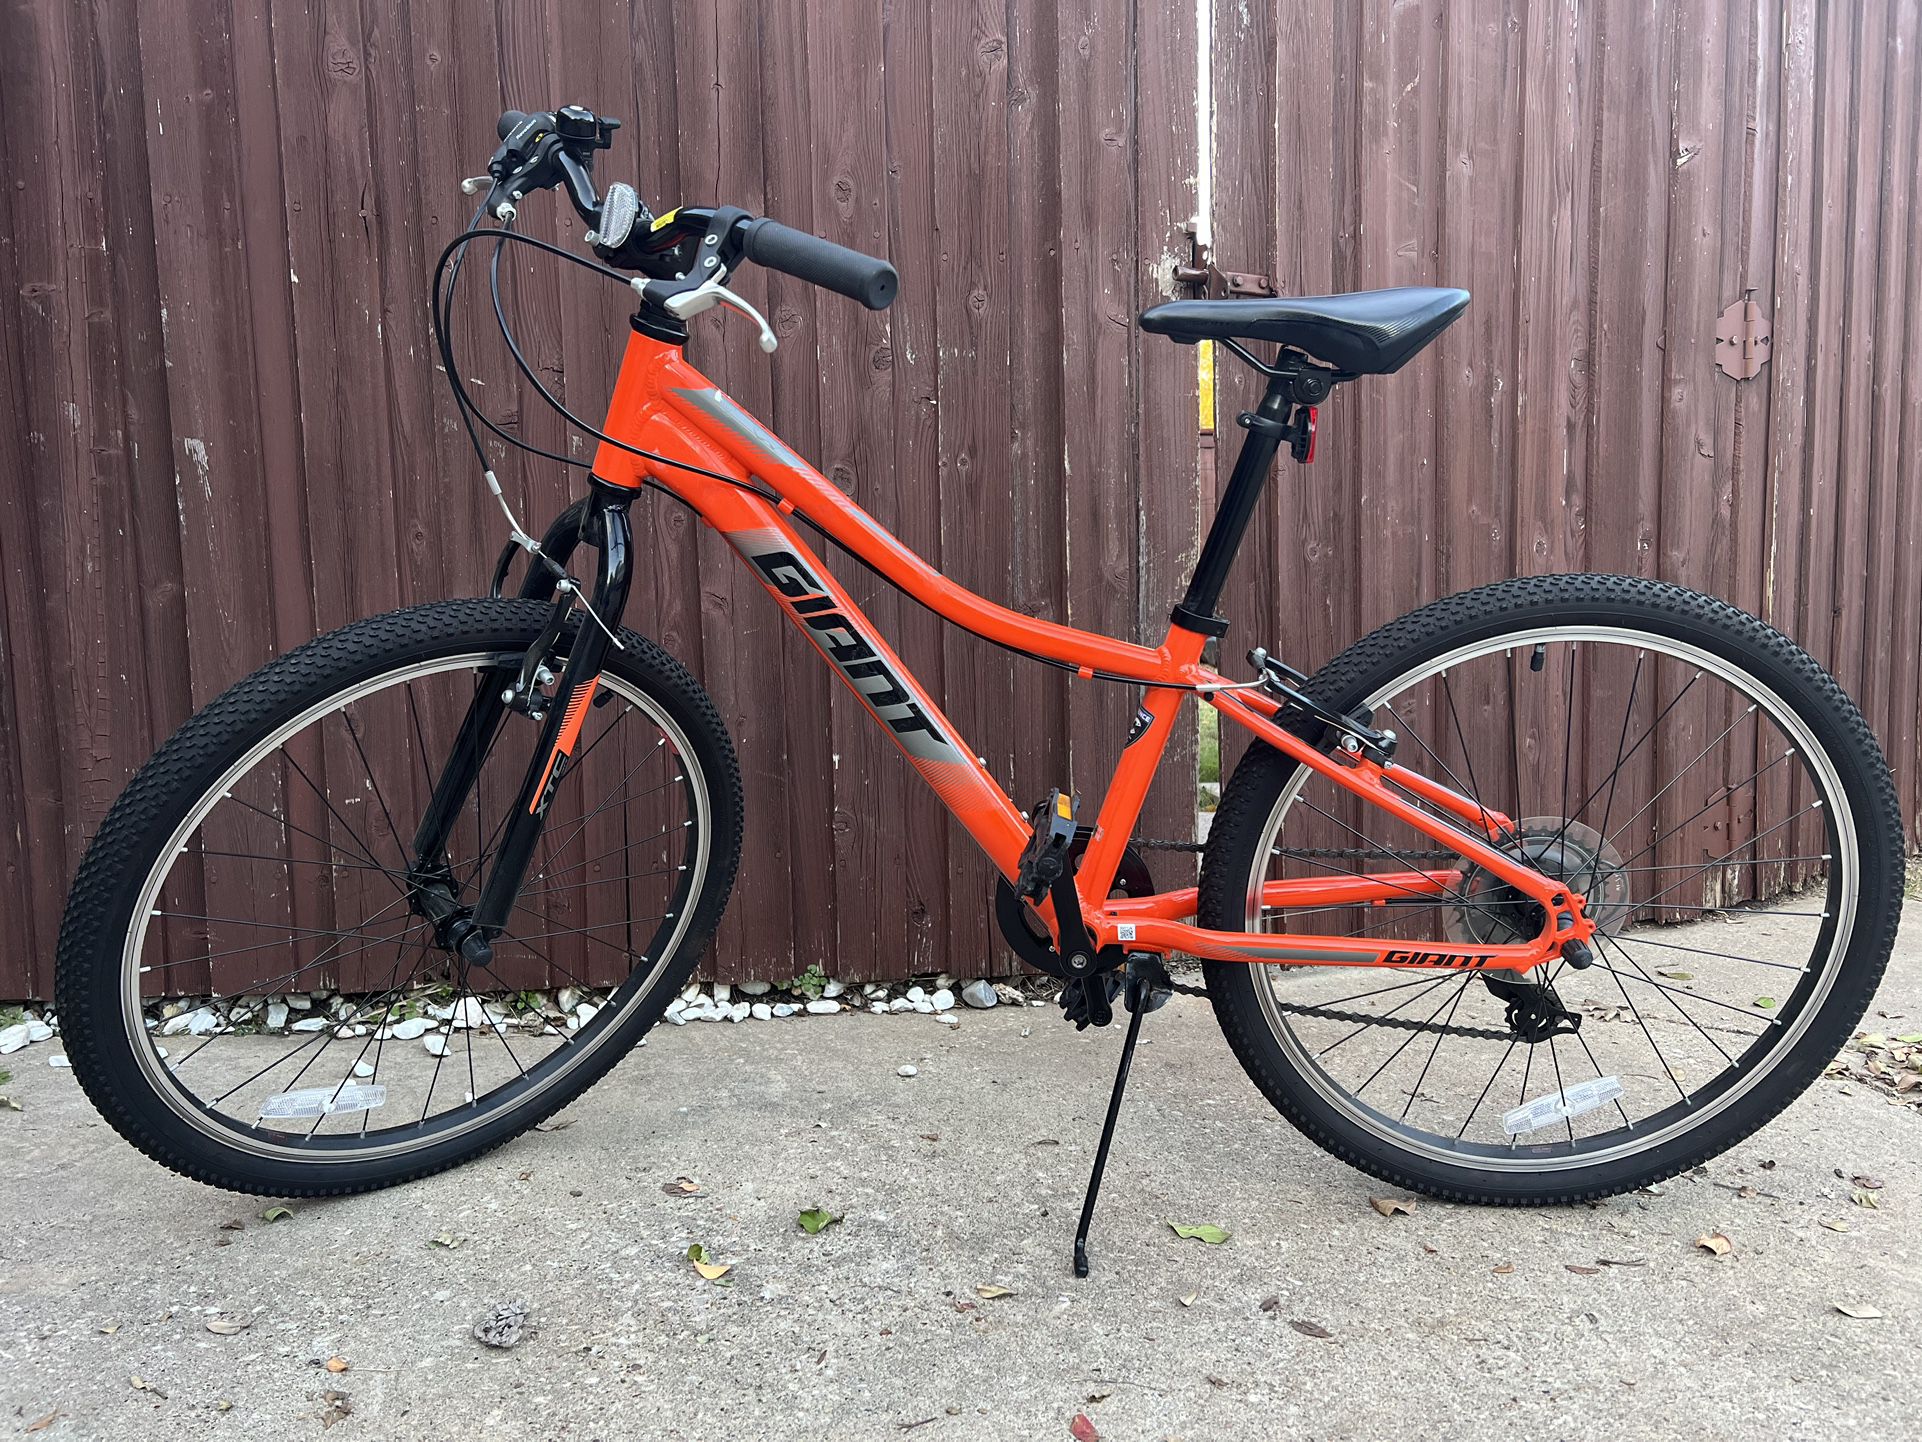 Giant 24” XTC Jr Bike / Bicycle 